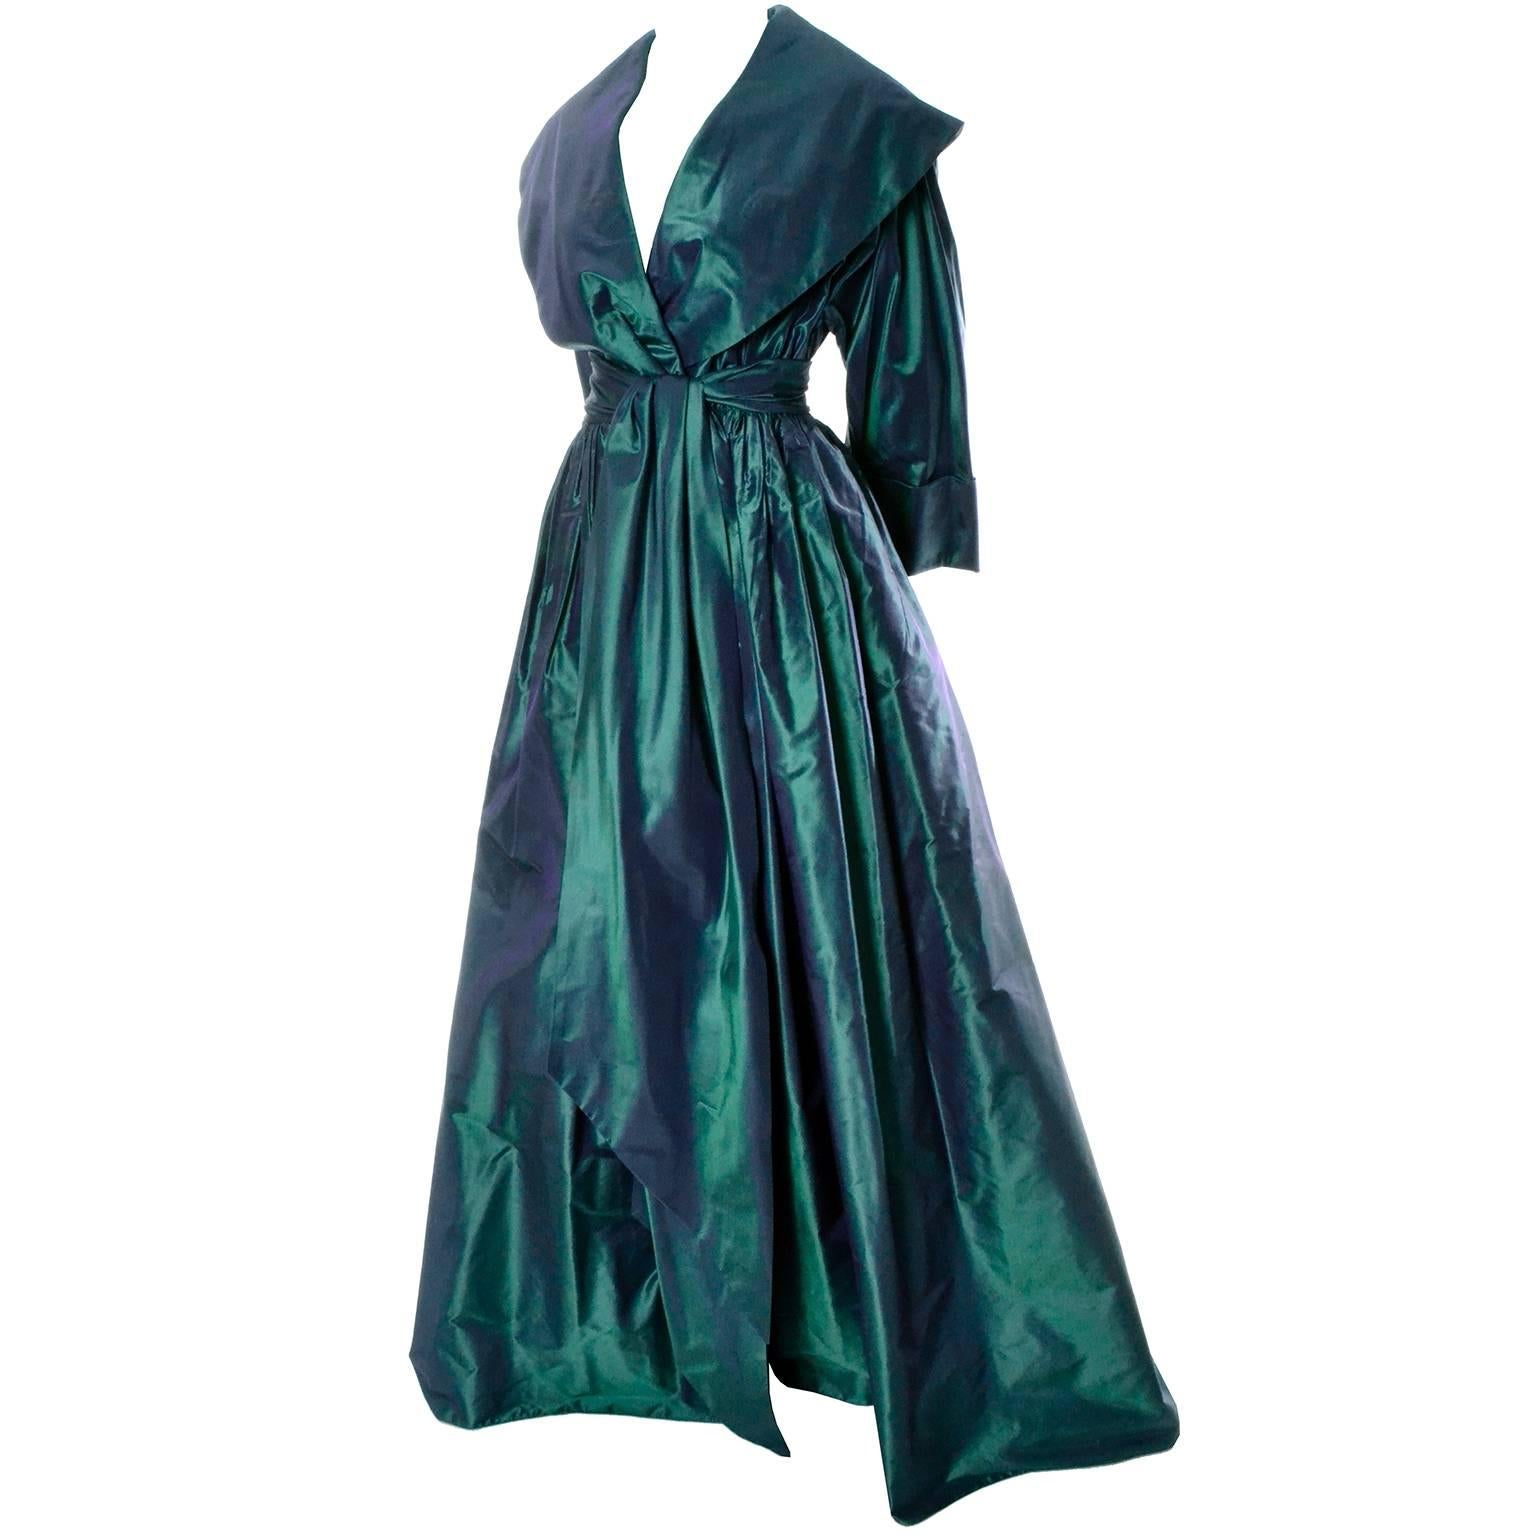 Carolyne Roehm Vintage Dress in Iridescent Green Taffeta From Bergdorf Goodman